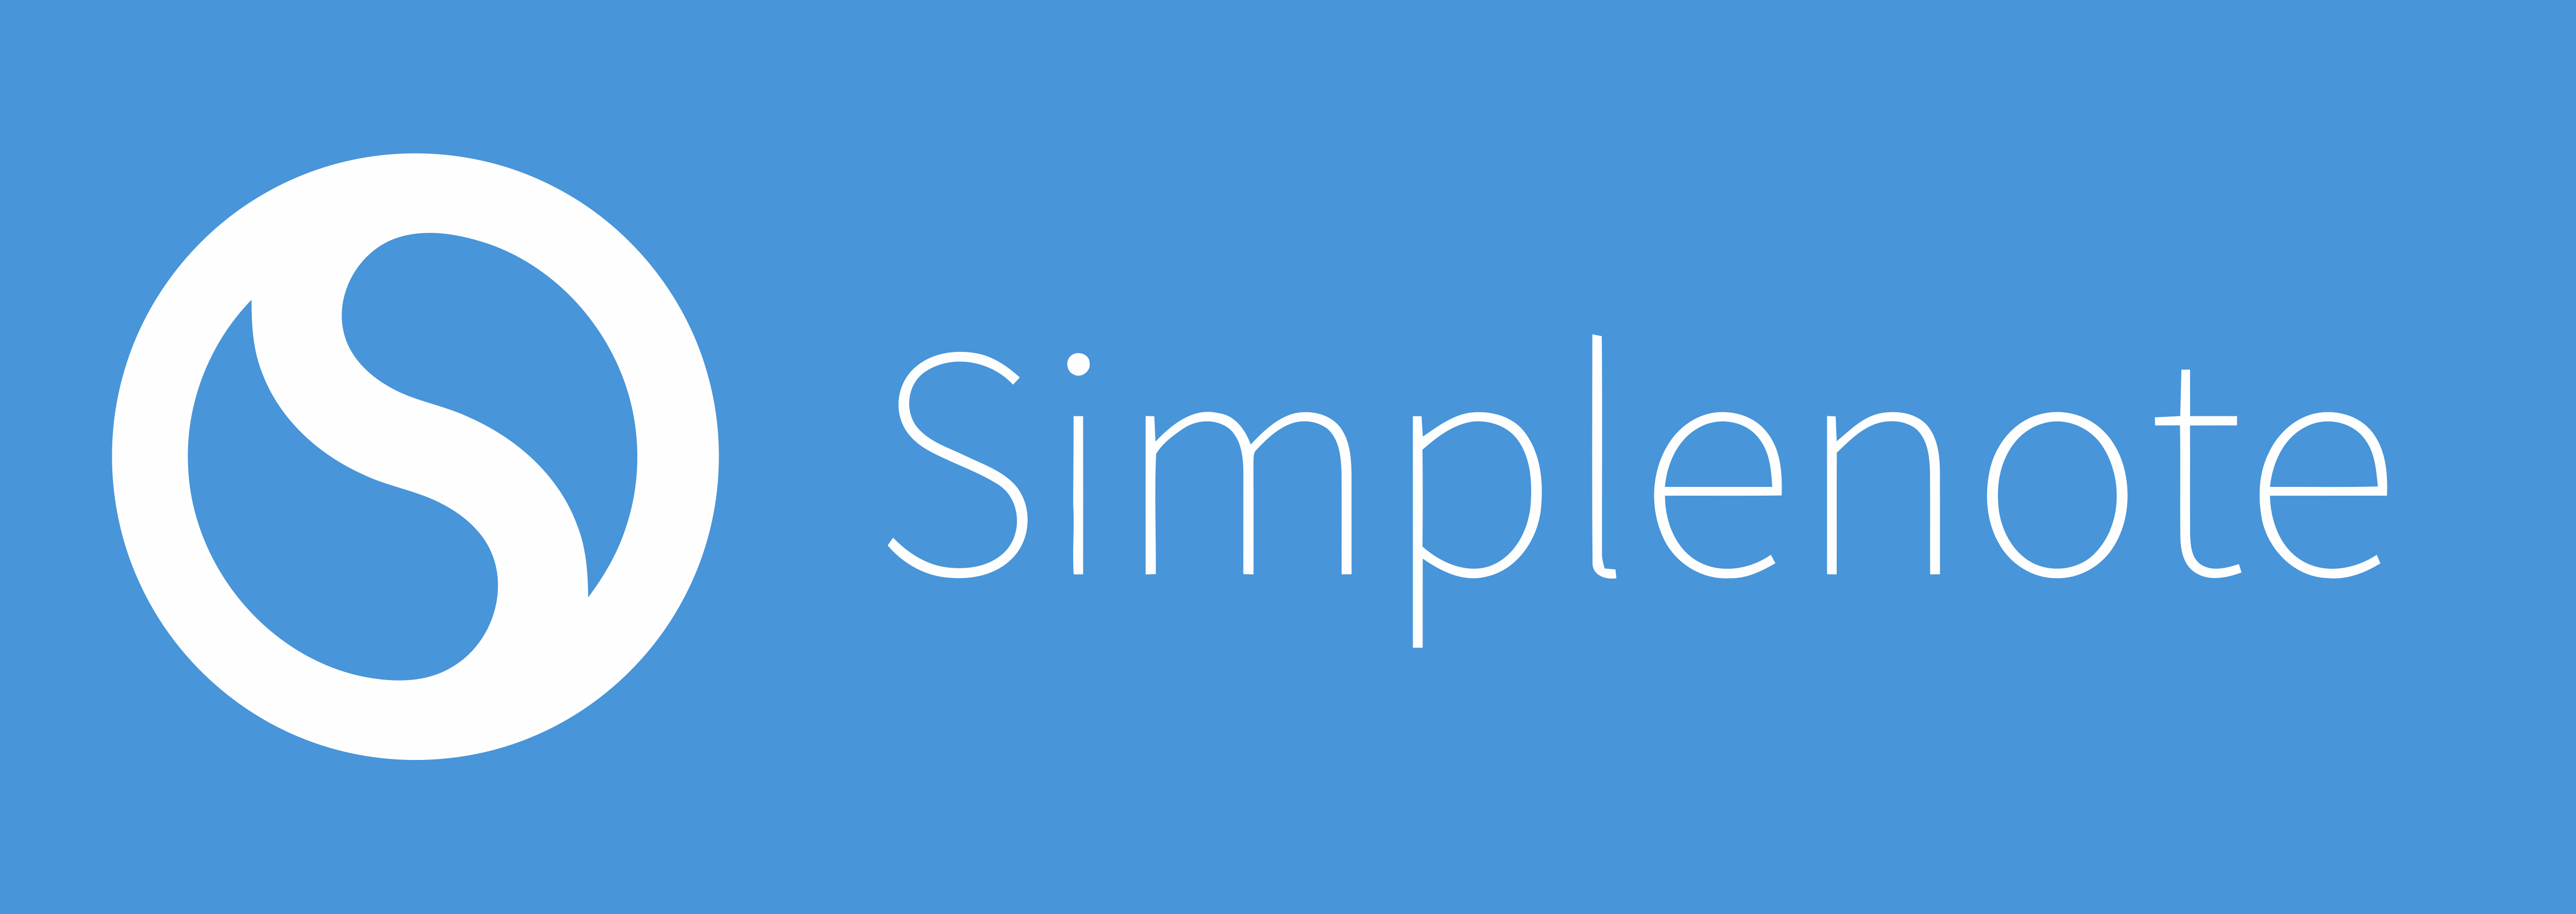 Simplenote – Logos Download